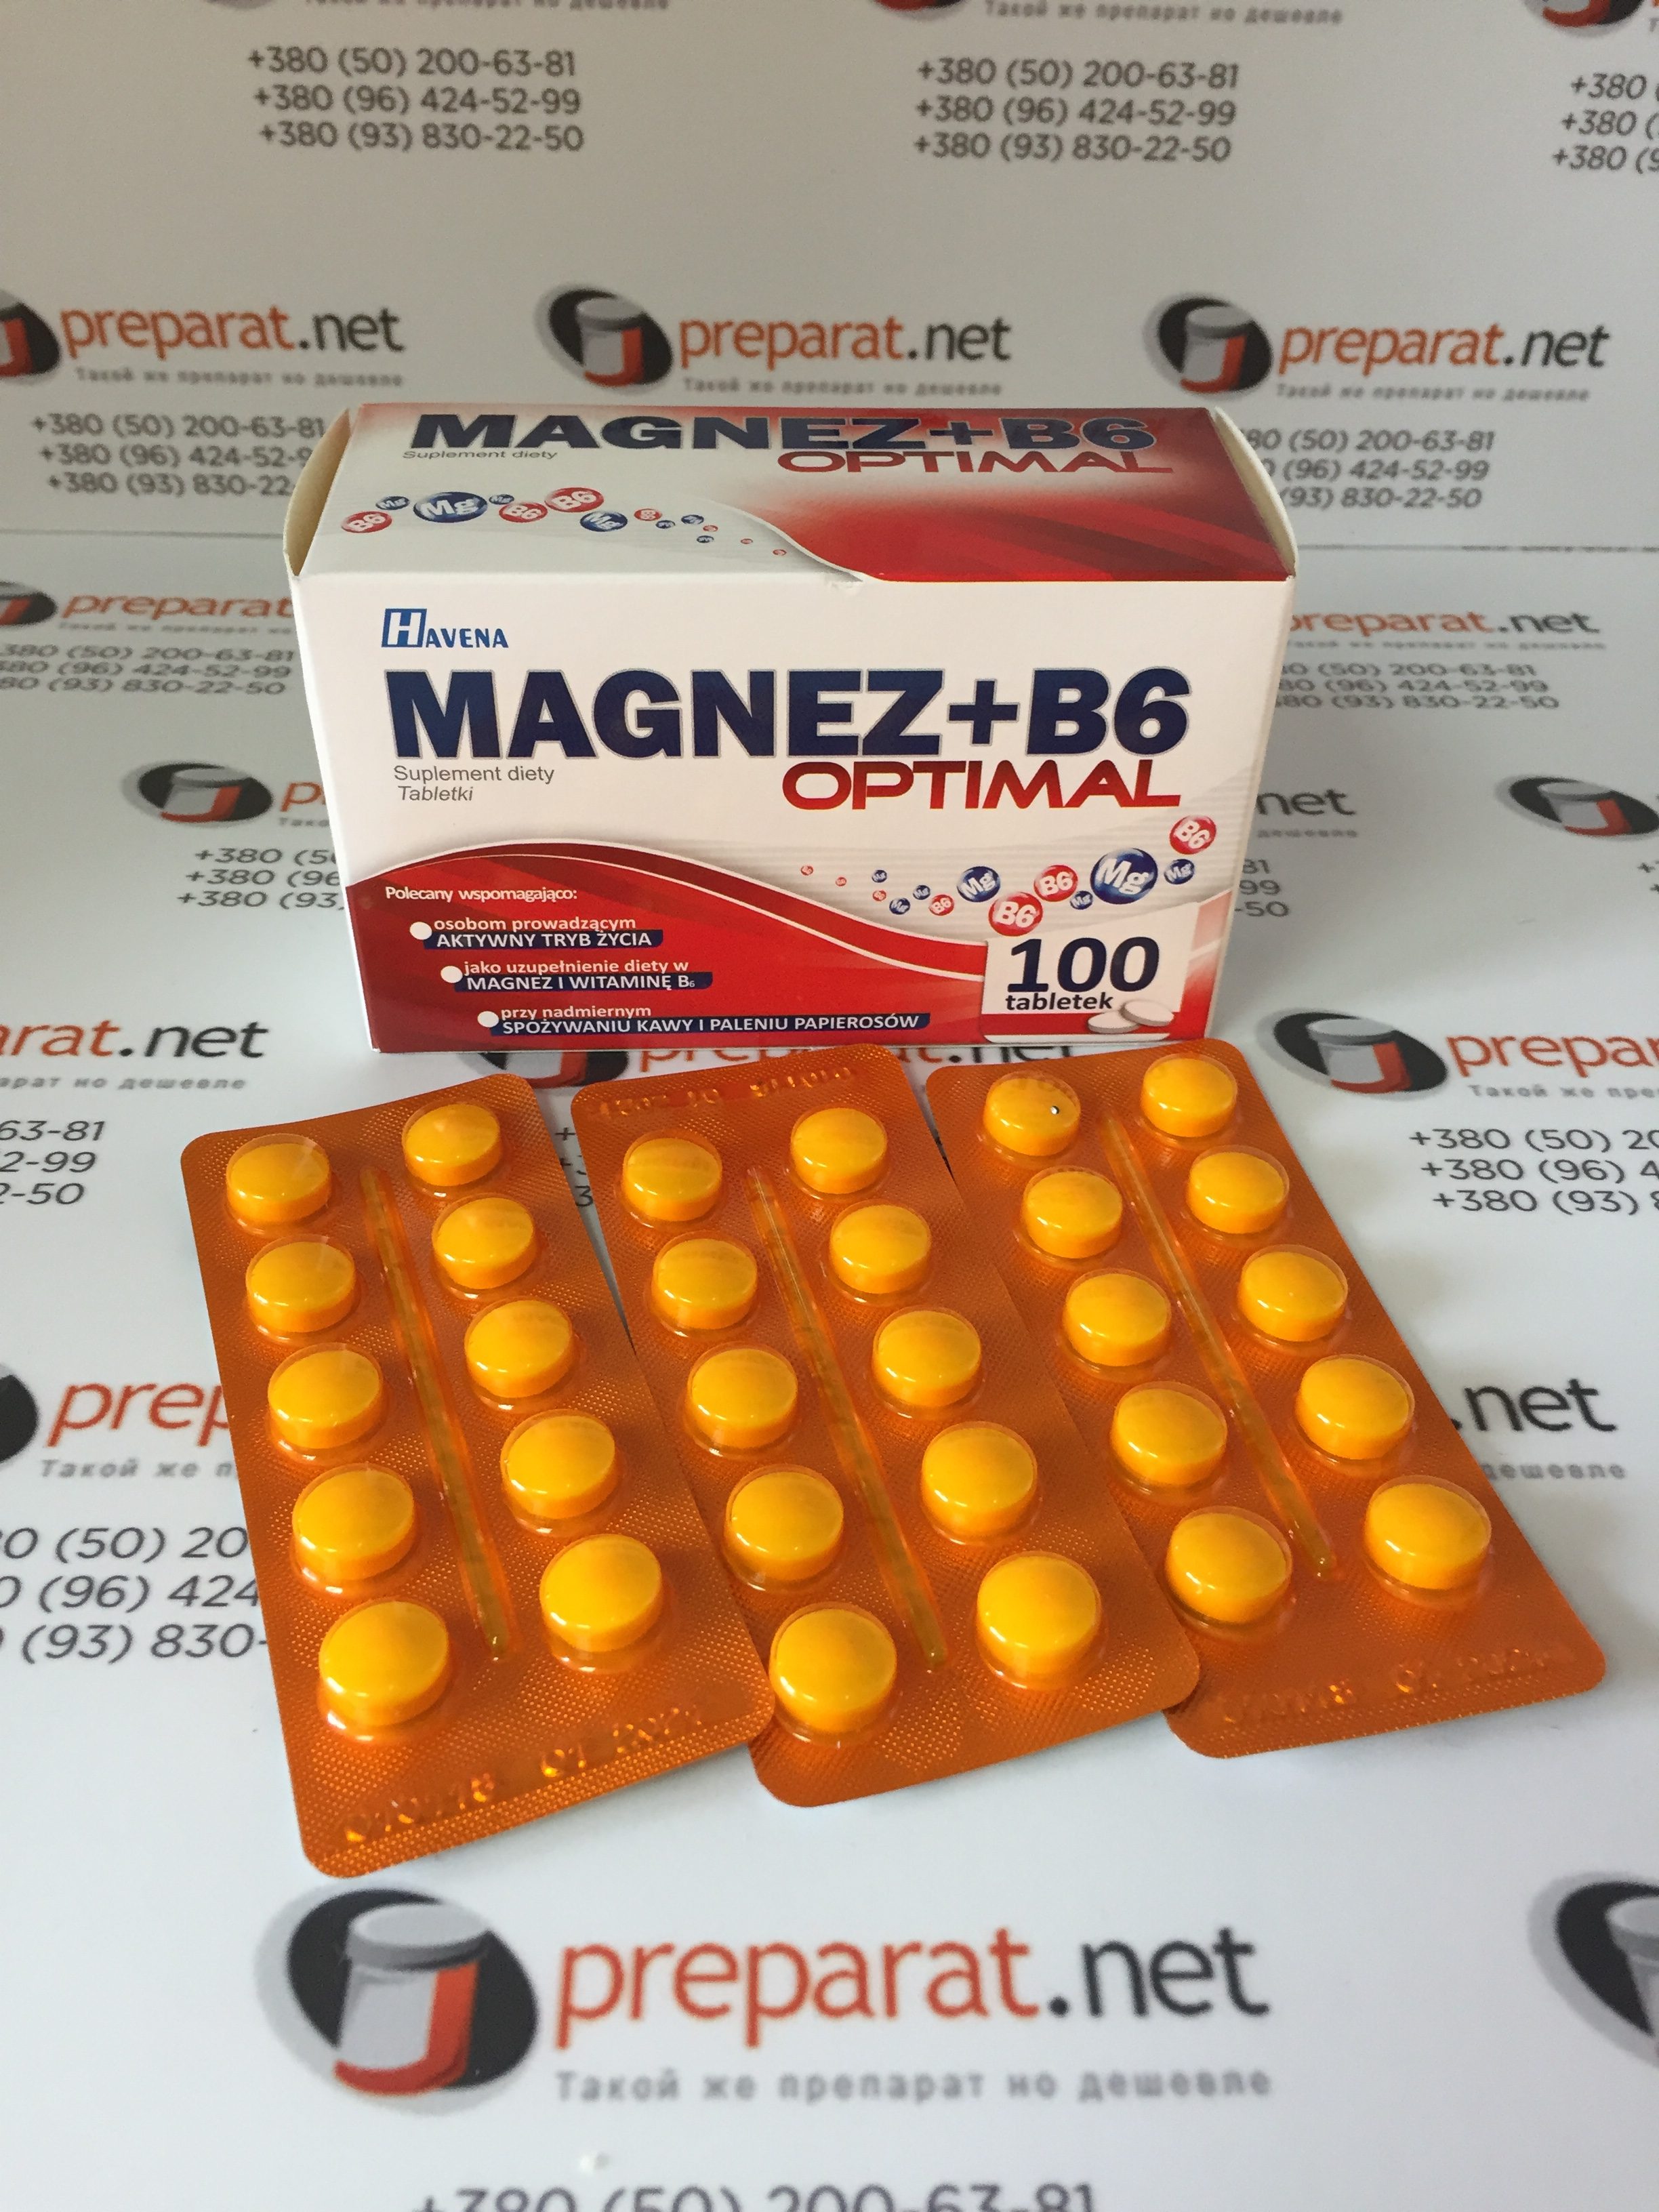 Магне + B6 Оптимальный, 100 таблеток — Preparat.net (Препарат.нет)